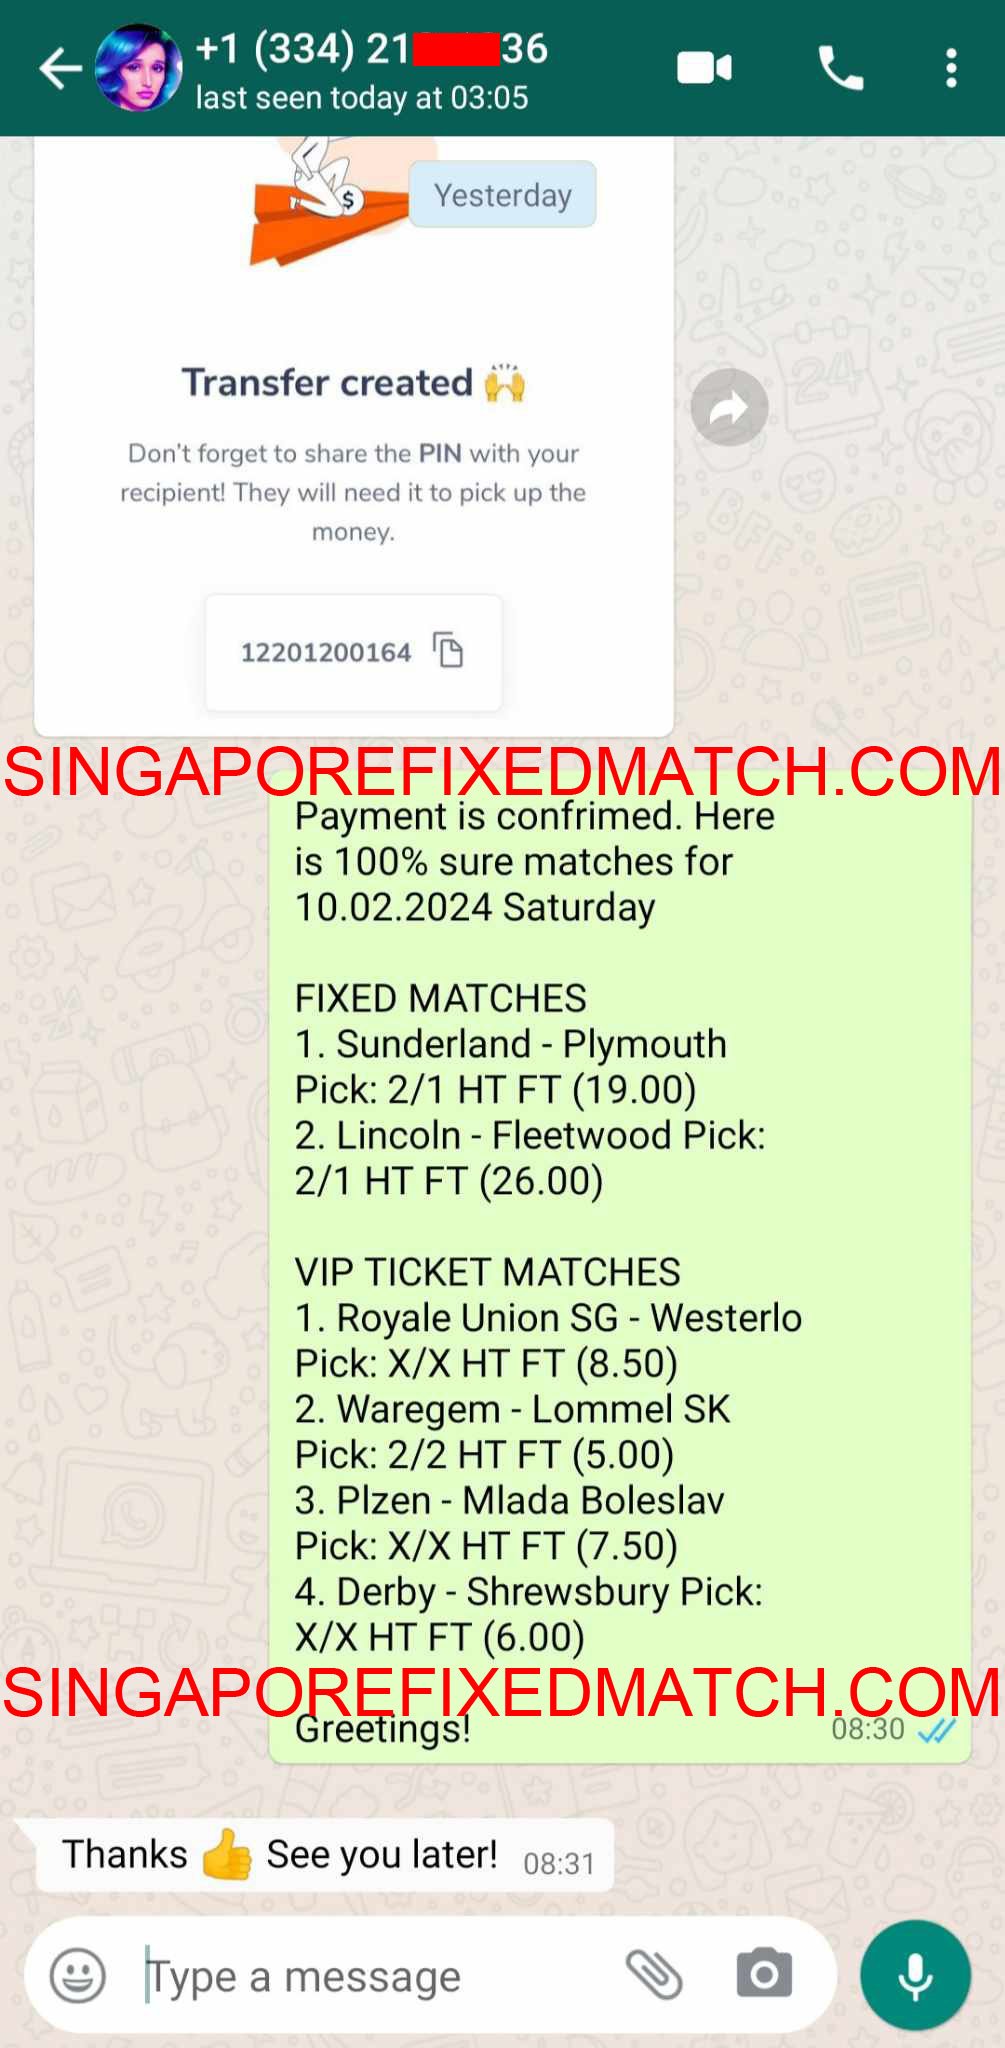 Singapore Fixed Matches